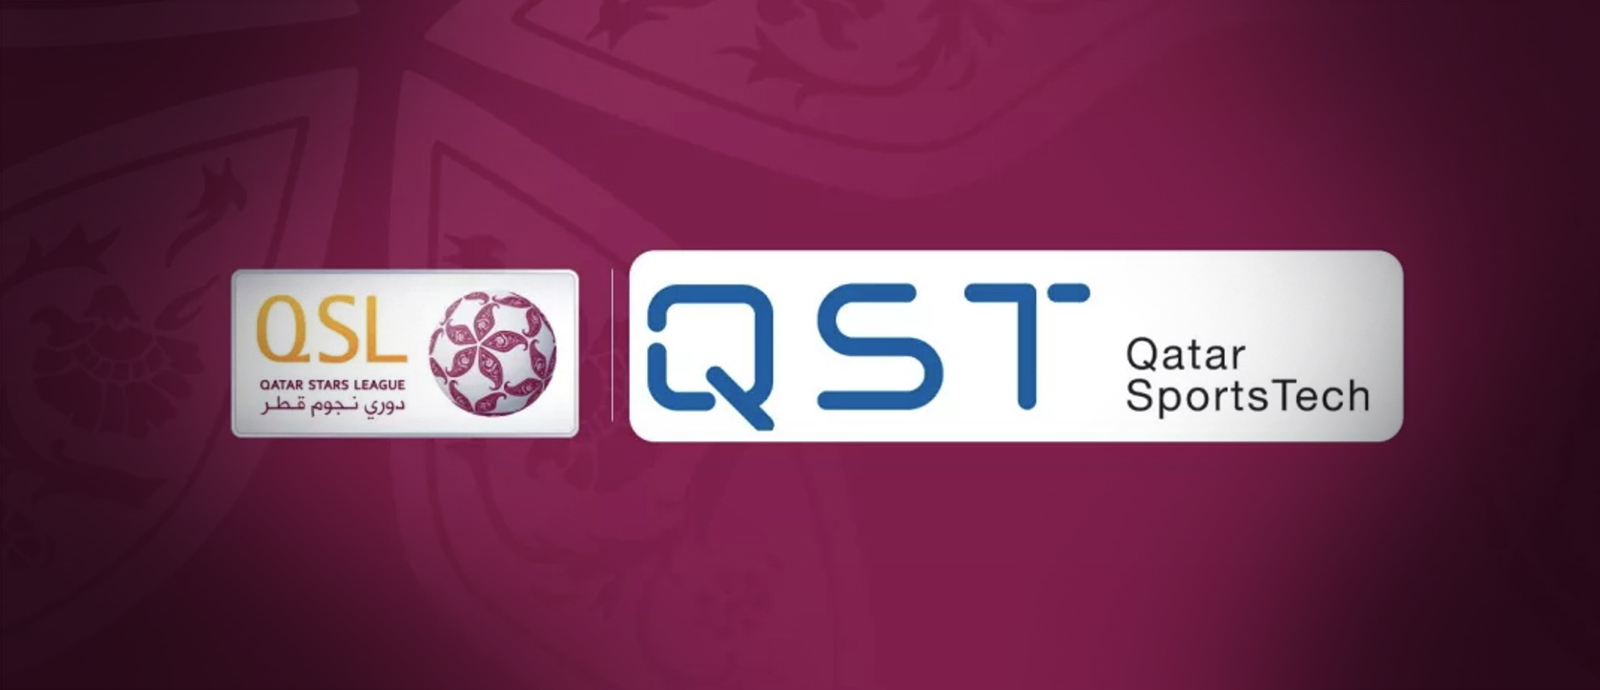 Qatar Stars League signs MoU with Qatar SportsTech